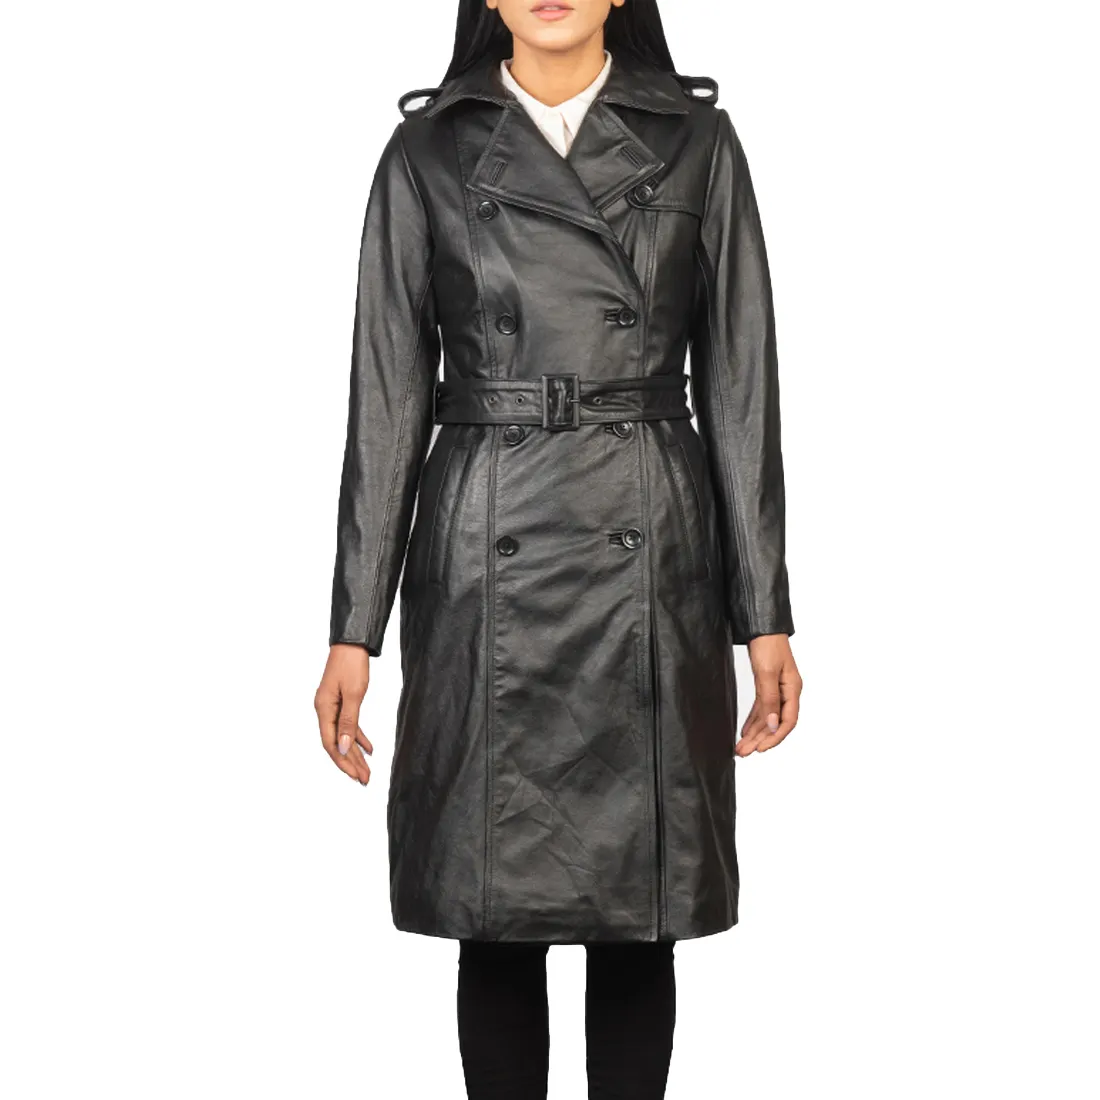 Women spring fashion leather trench coat long ladies sheepskin coat